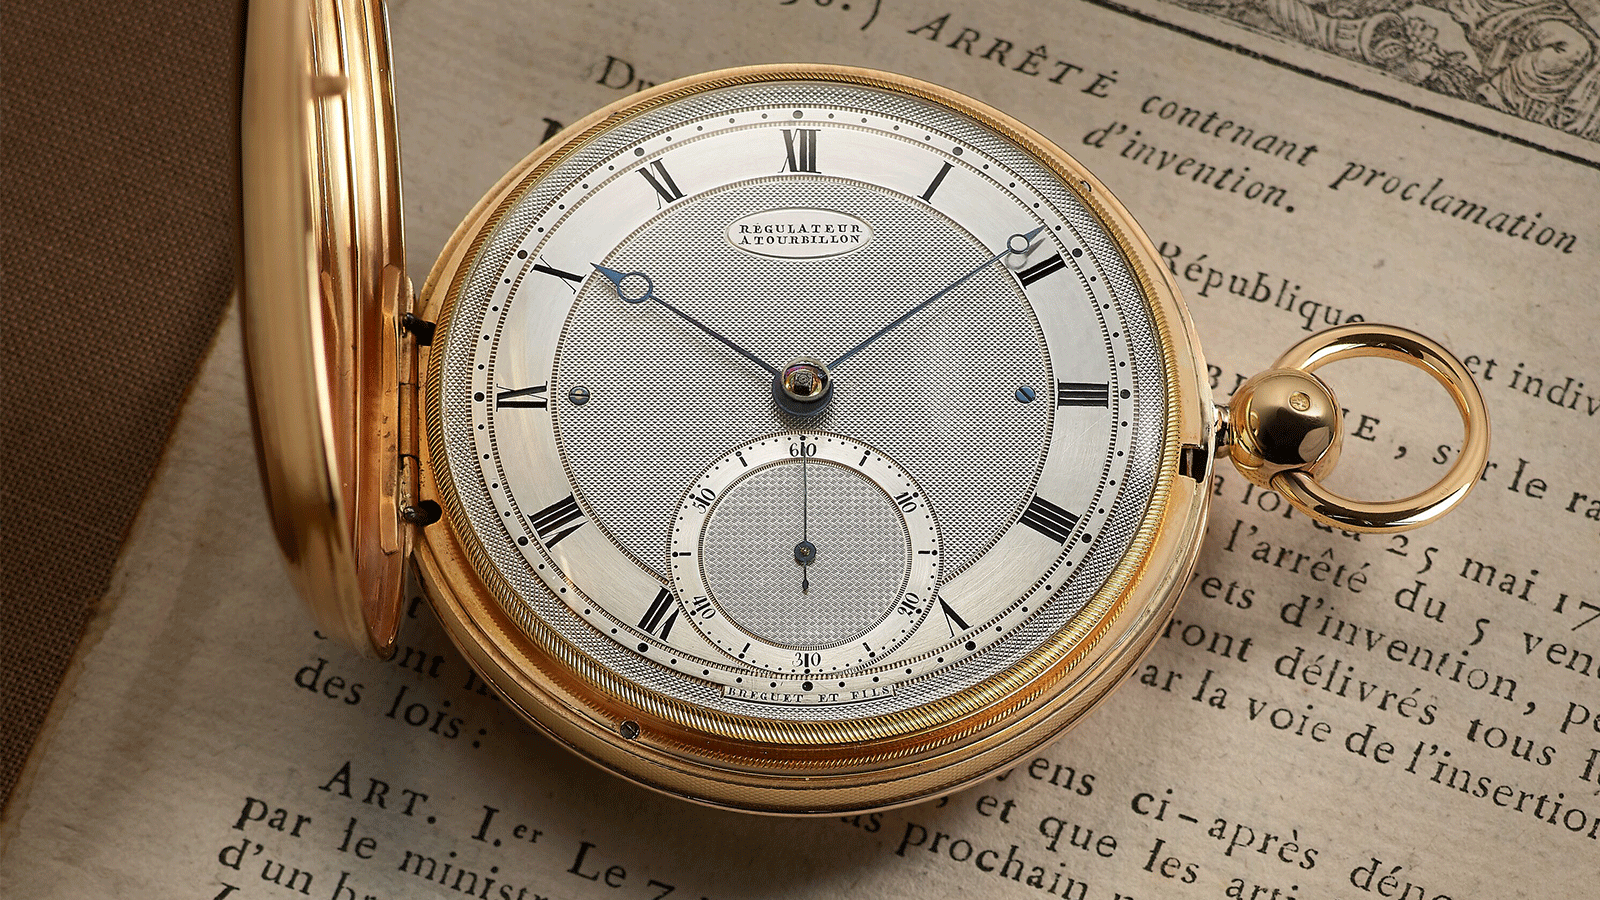 Breguet No. 2567, Tourbillon timepiece sold in 1812 to Mr Armand-Pierre Le Bigot